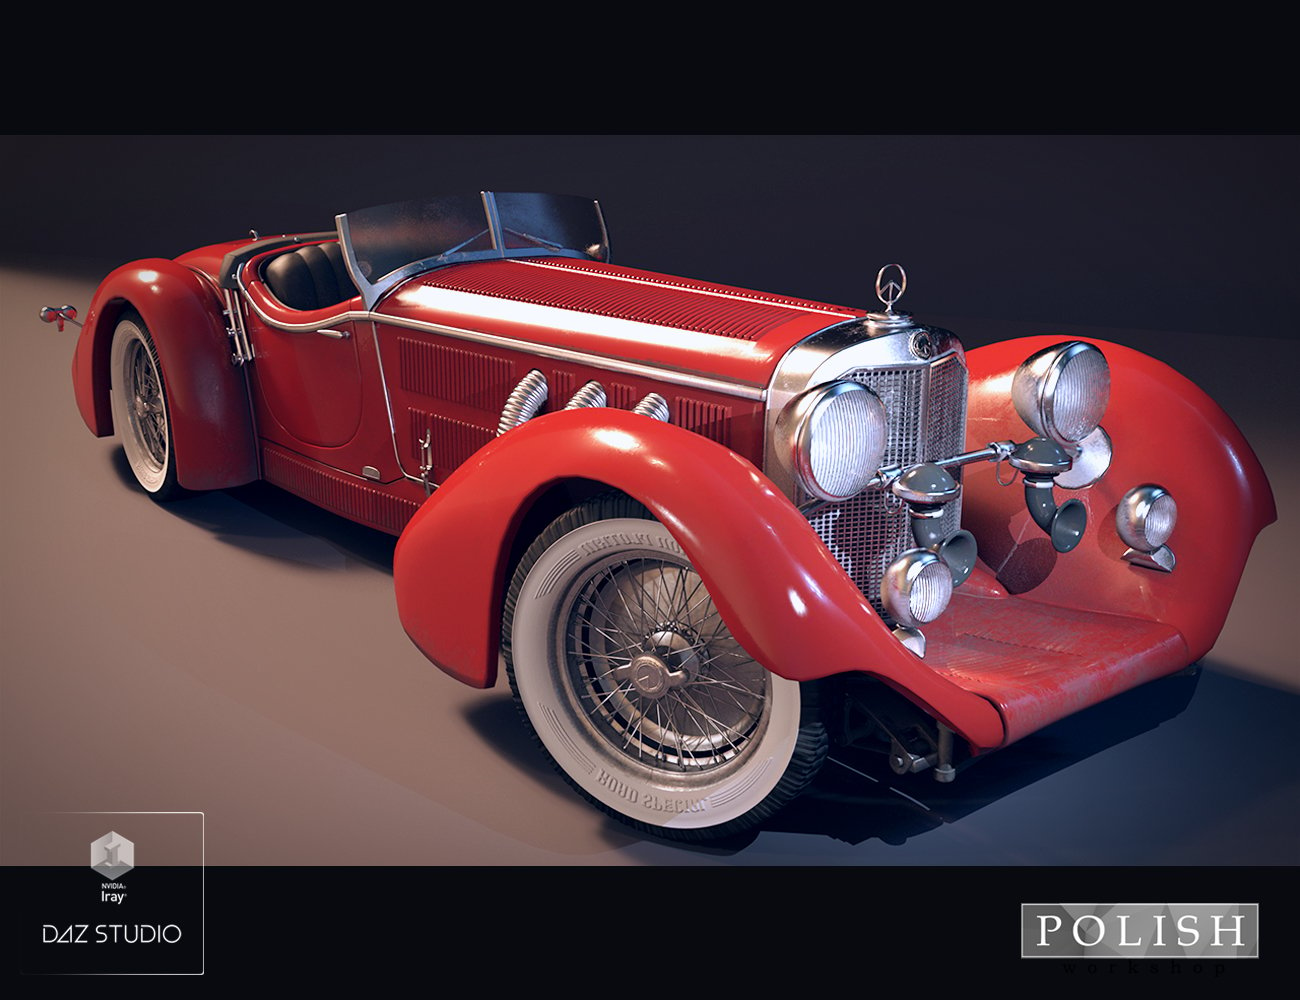 Retro Super Roadster by: Polish, 3D Models by Daz 3D